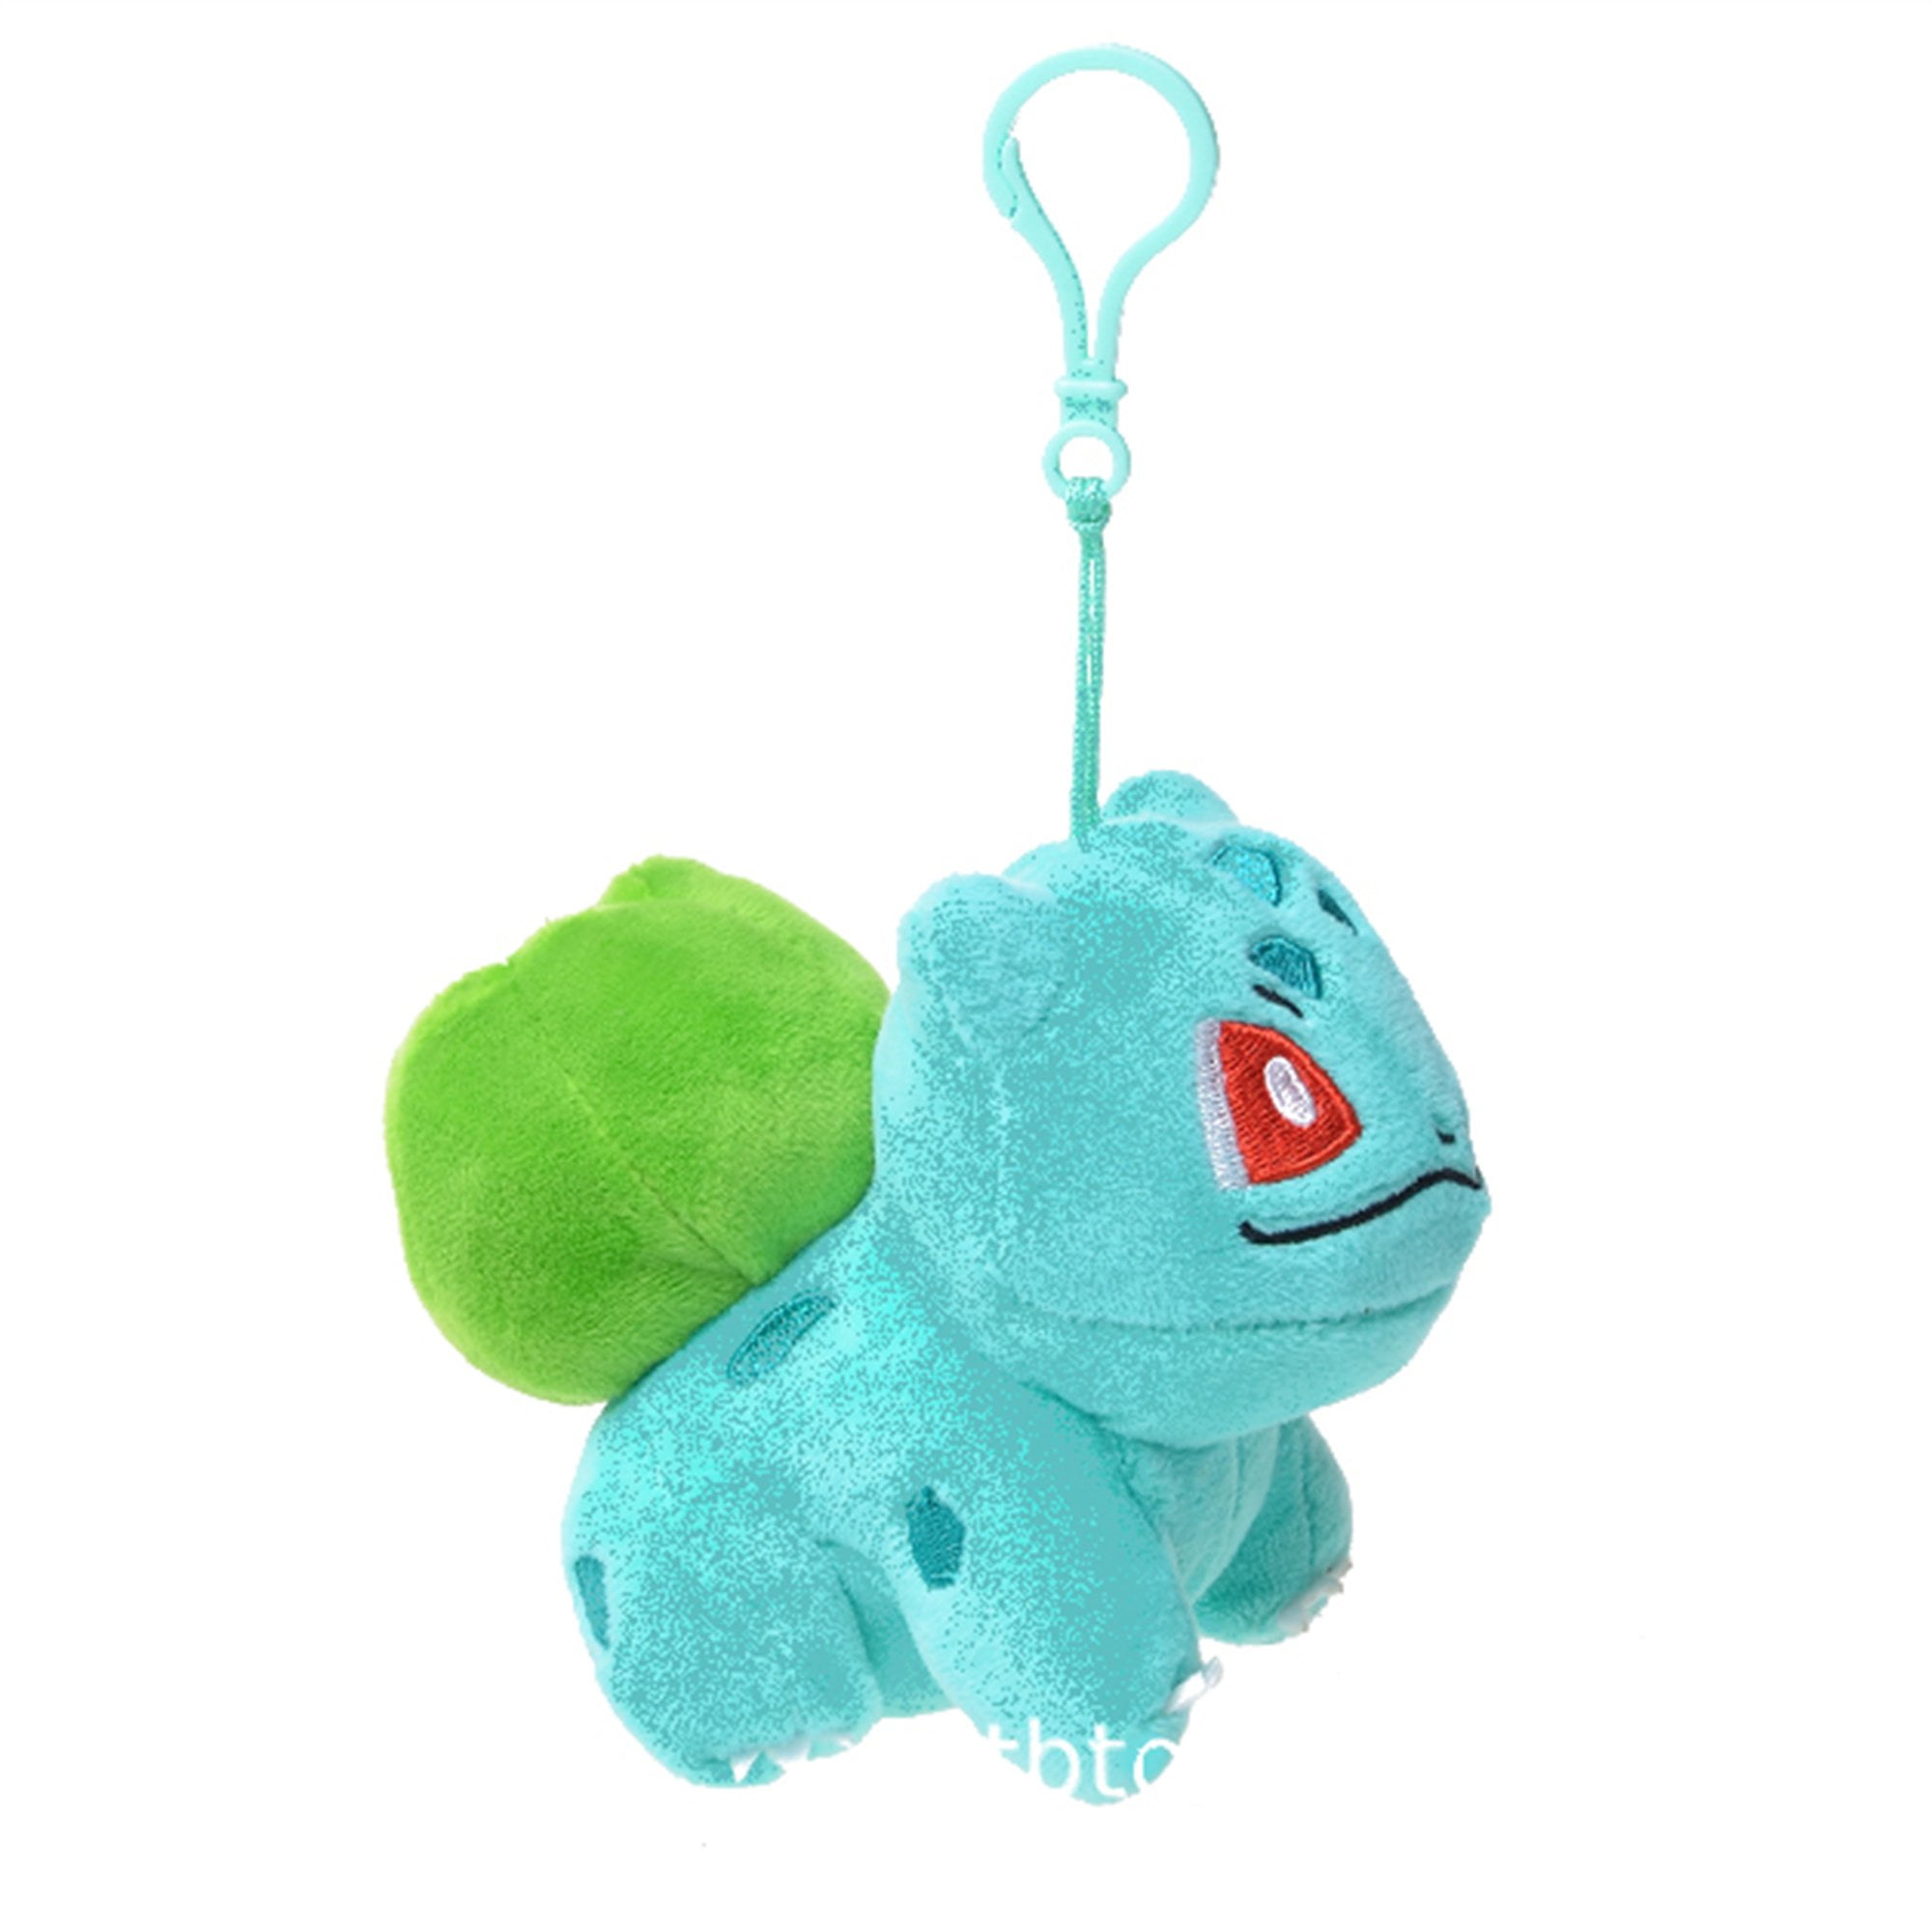 HOT New Pokemon Bulbasaur Plush Soft Toy Stuffed Animal Doll Teddy 6'' Kids Gift 